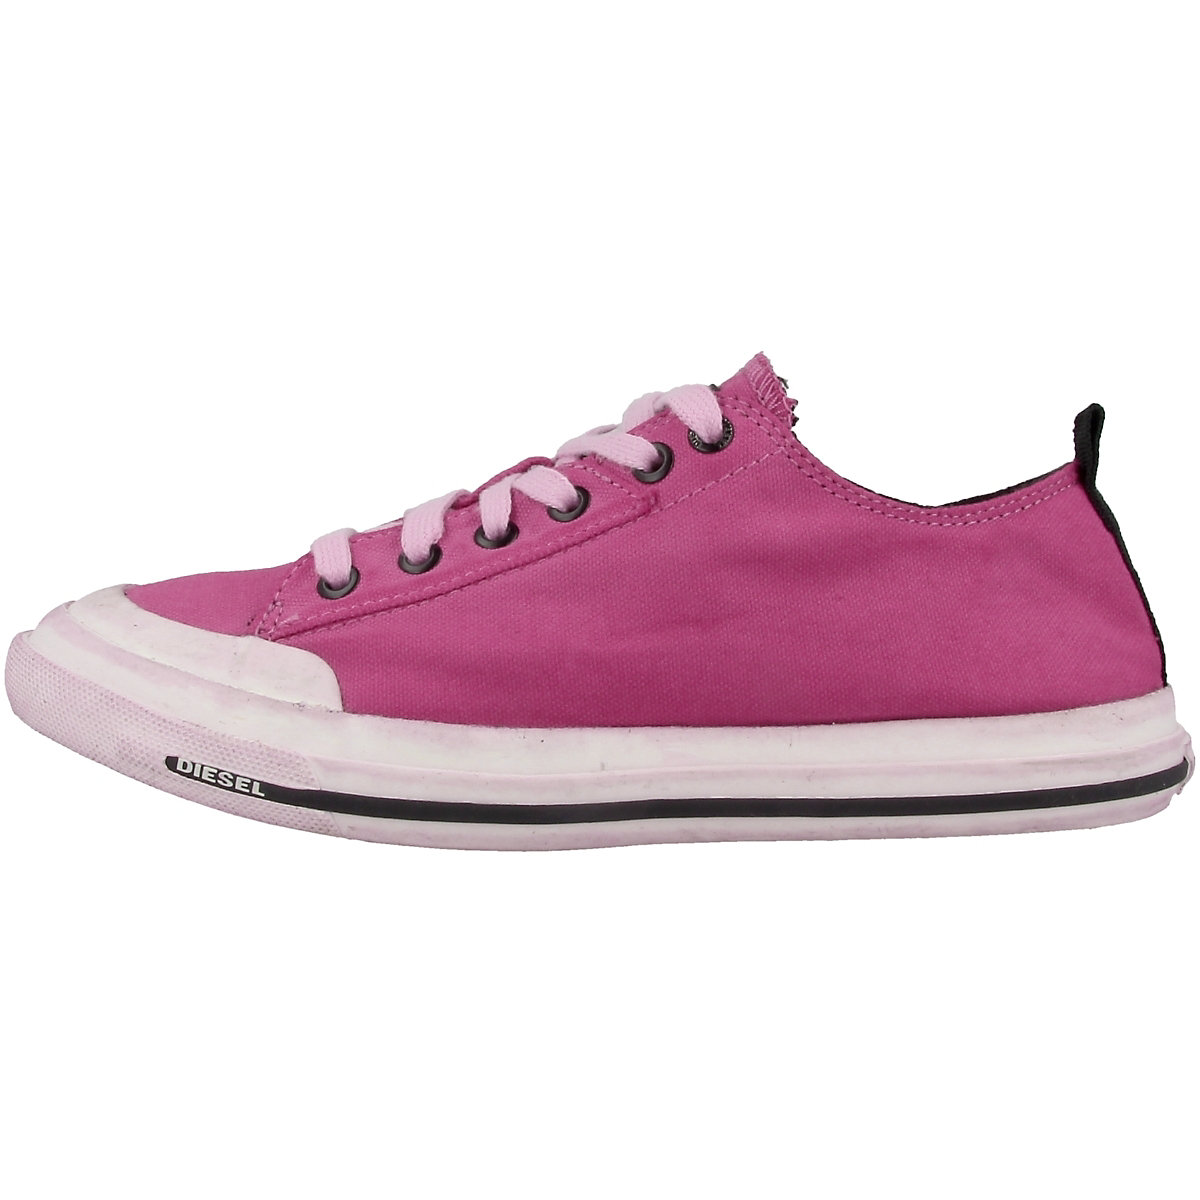 DIESEL S-Astico Low Cut Sneaker low Damen Sneakers Low pink